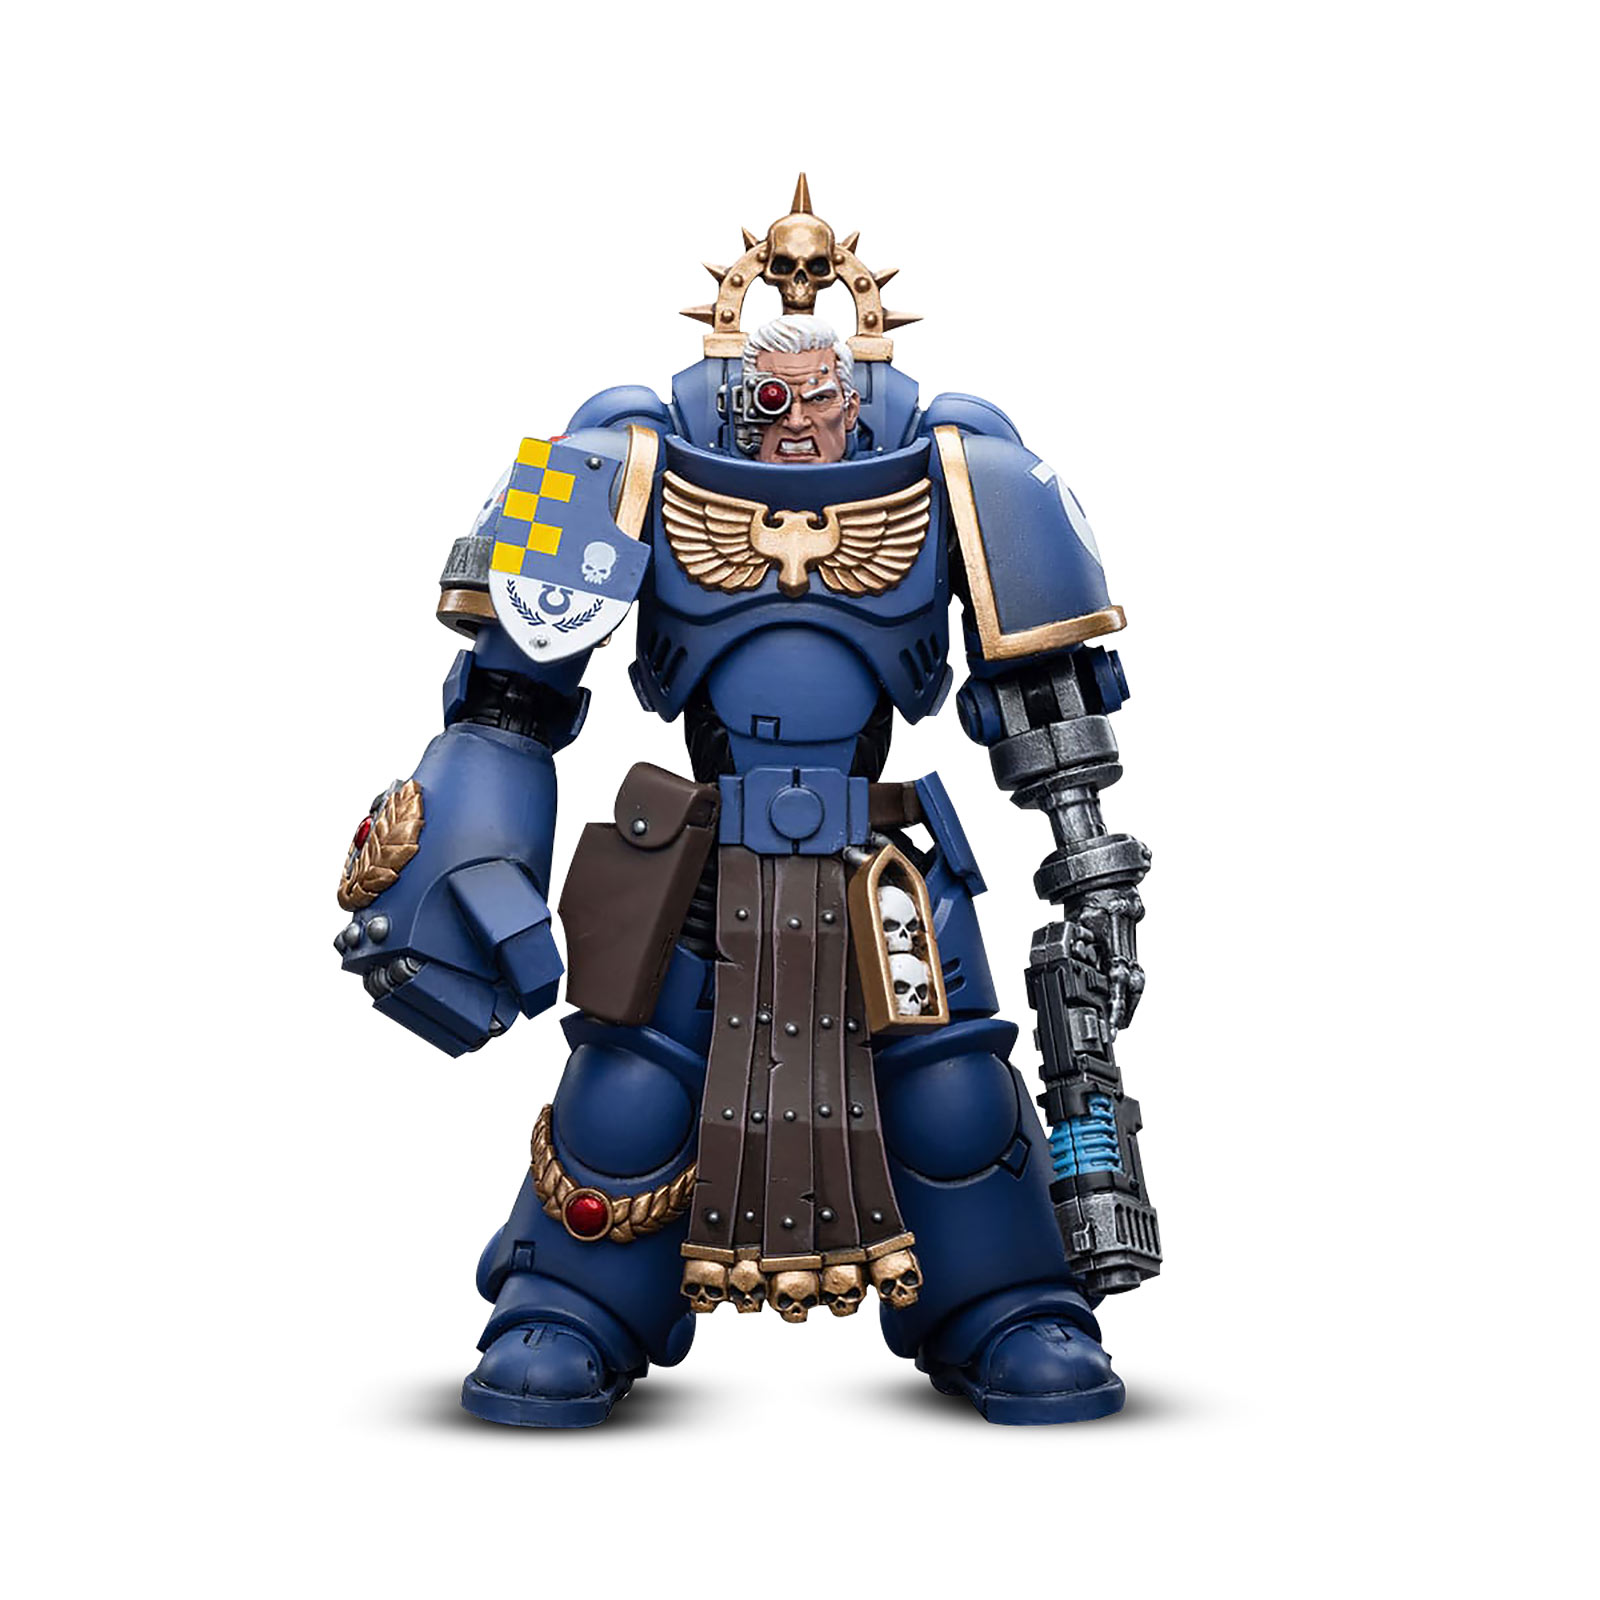 Warhammer 40k - Ultramarines Lieutenant with Power Fist Action Figure